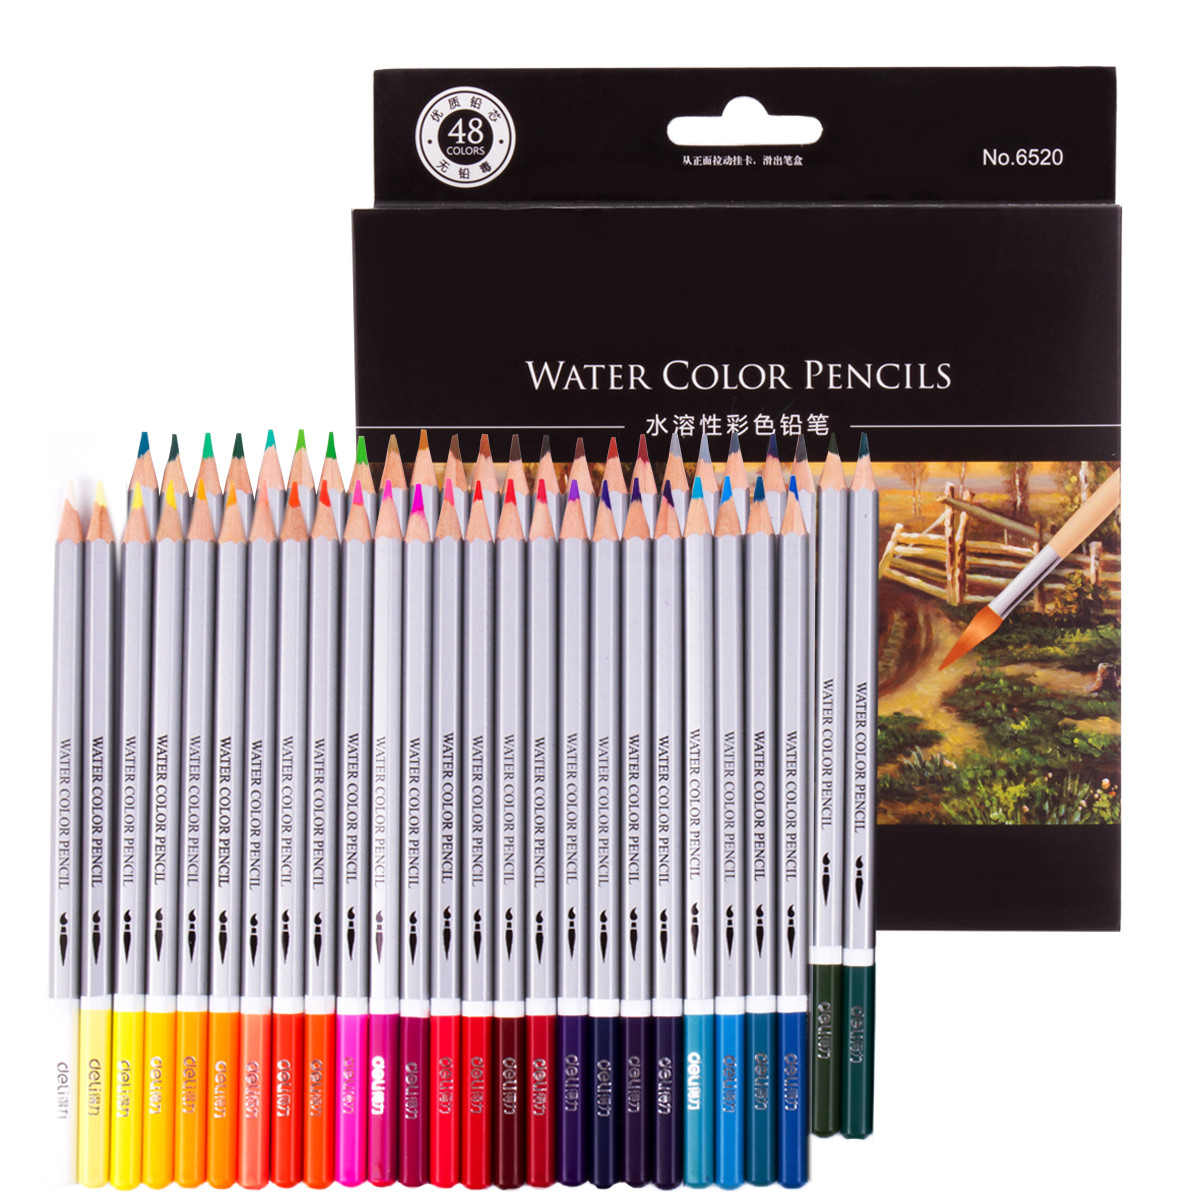 Adult Coloring Books And Pencils
 Colored Pencils Soft Core Color Pencil Set for Kids Adult